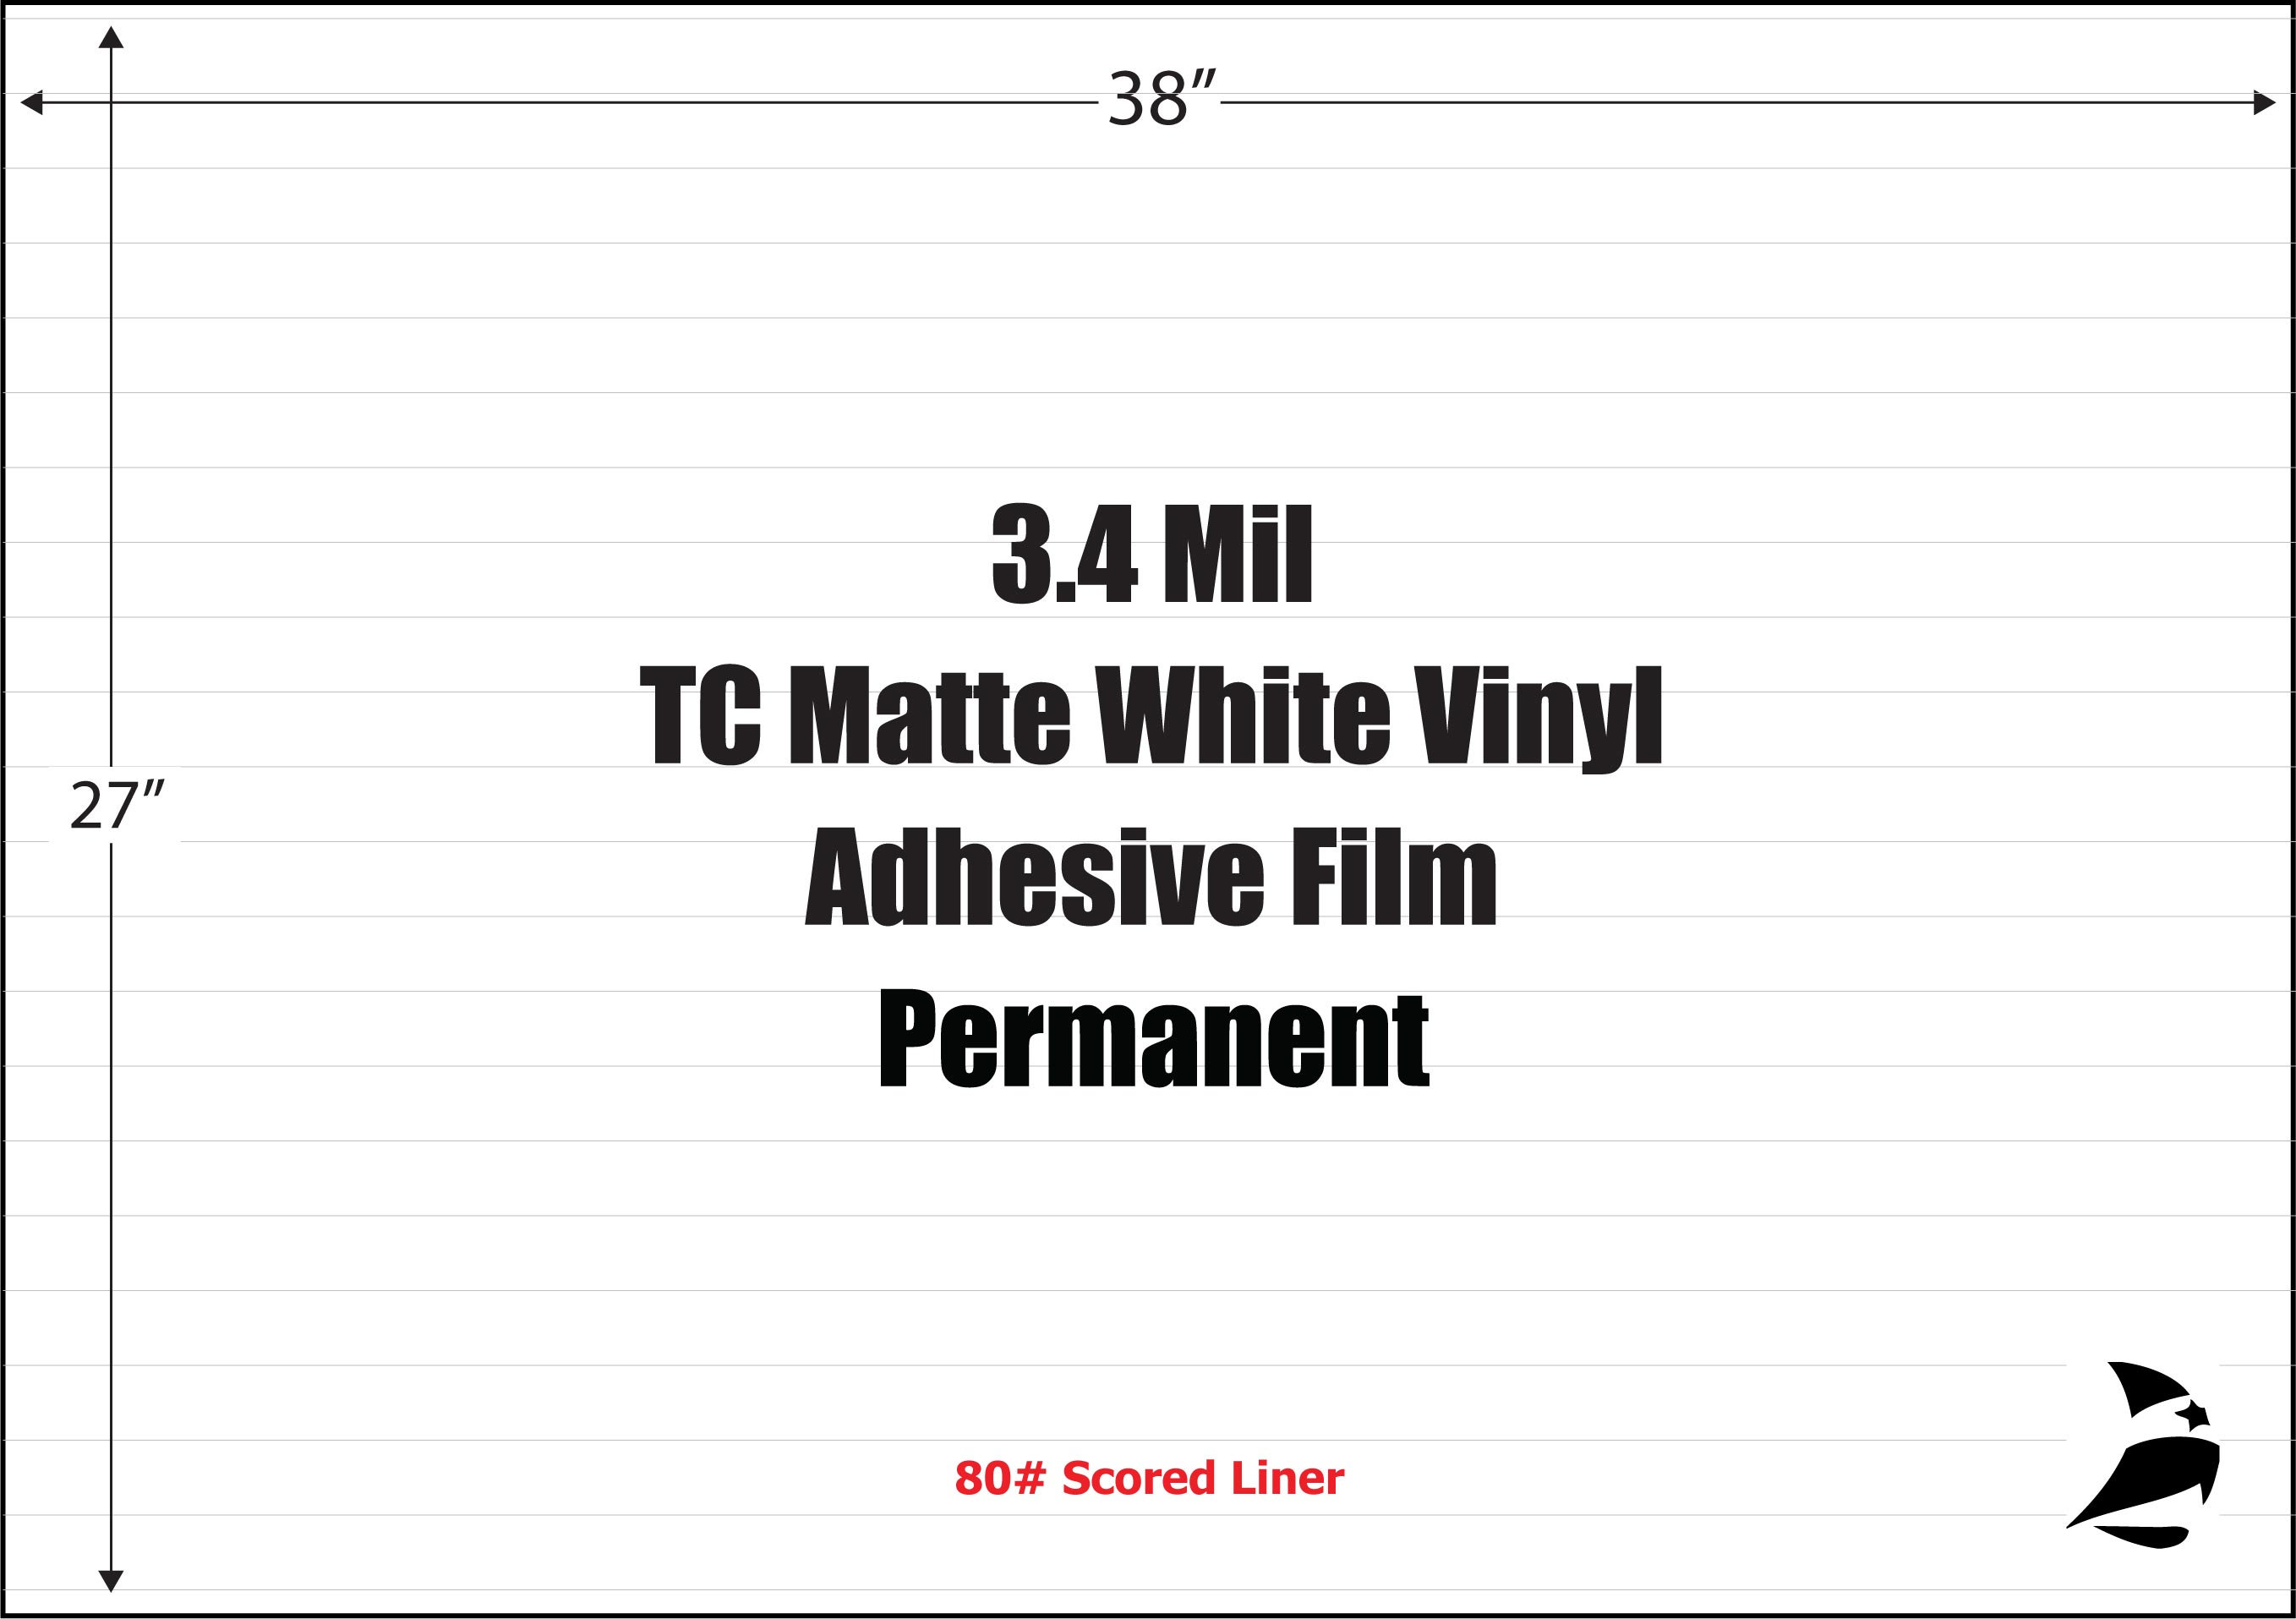 Matte White Digital Vinyl, 12 x 18, GHS BS5609, Permanent, 0